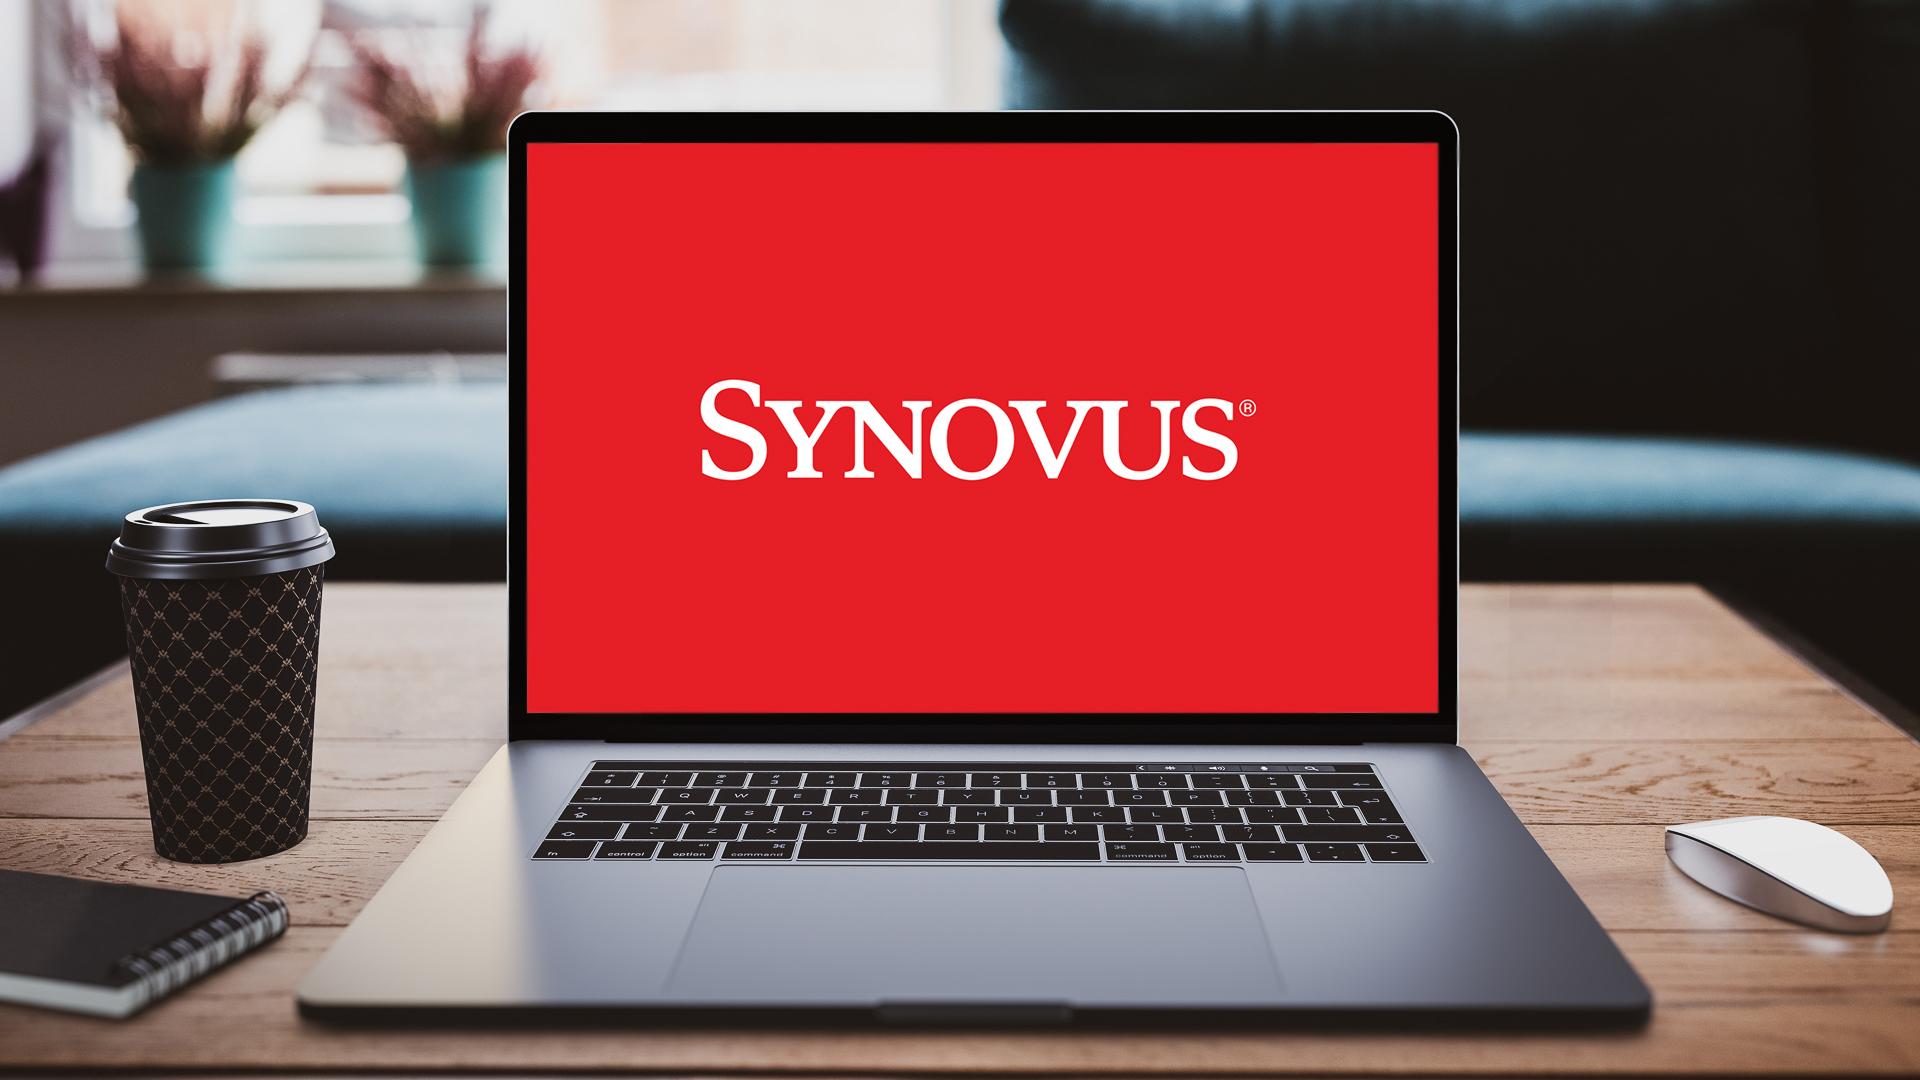 Synovus Bank website